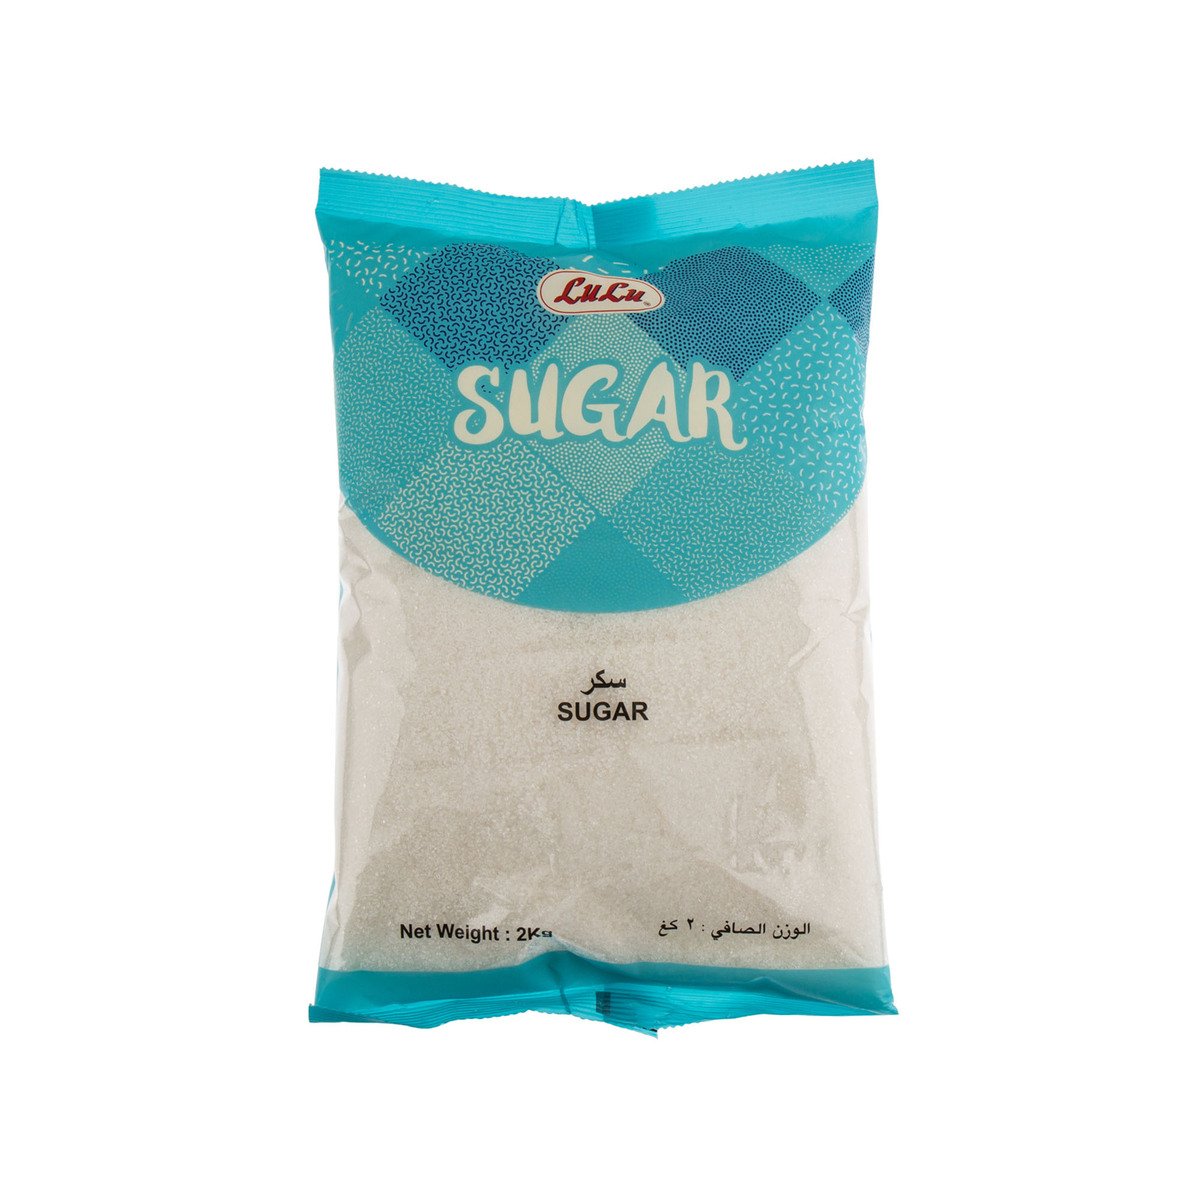 Lulu Granulated Sugar 2kg Online At Best Price White Sugar Lulu